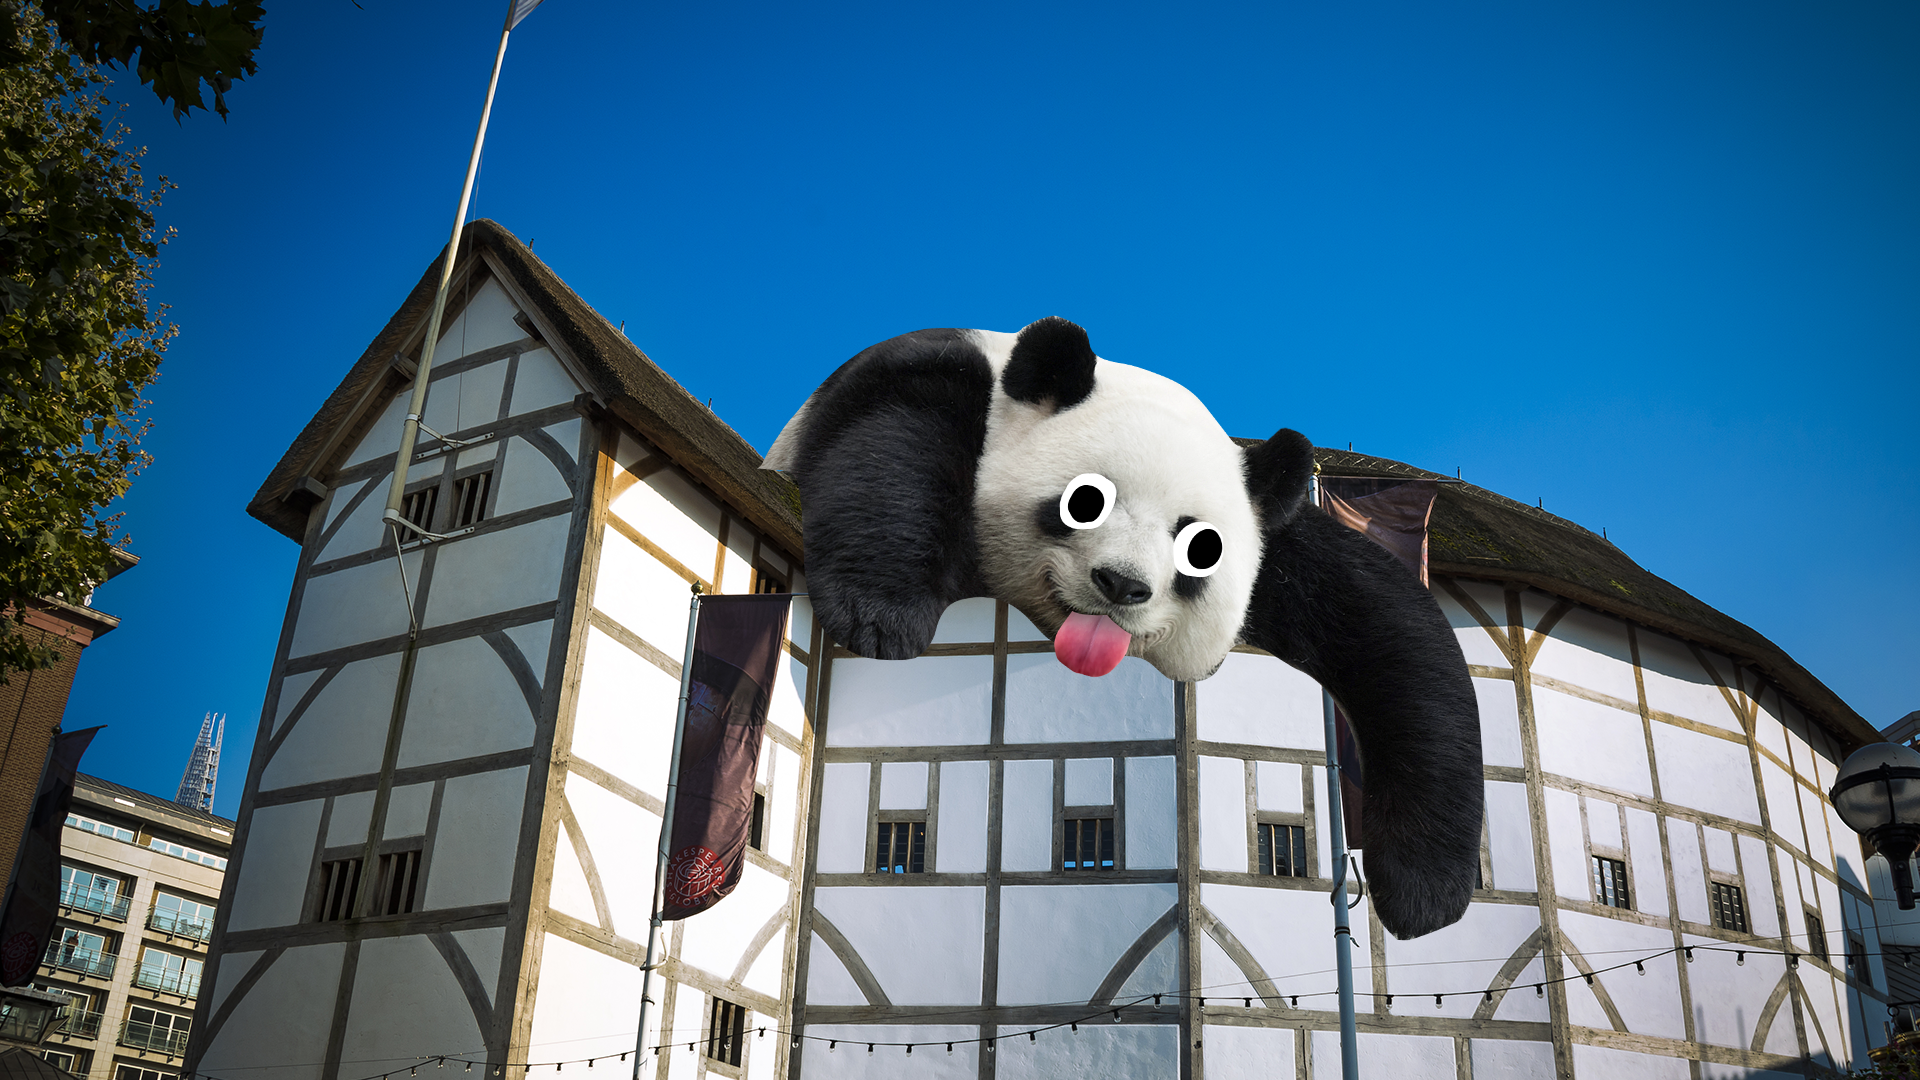 Globe theatre with giant derpy panda